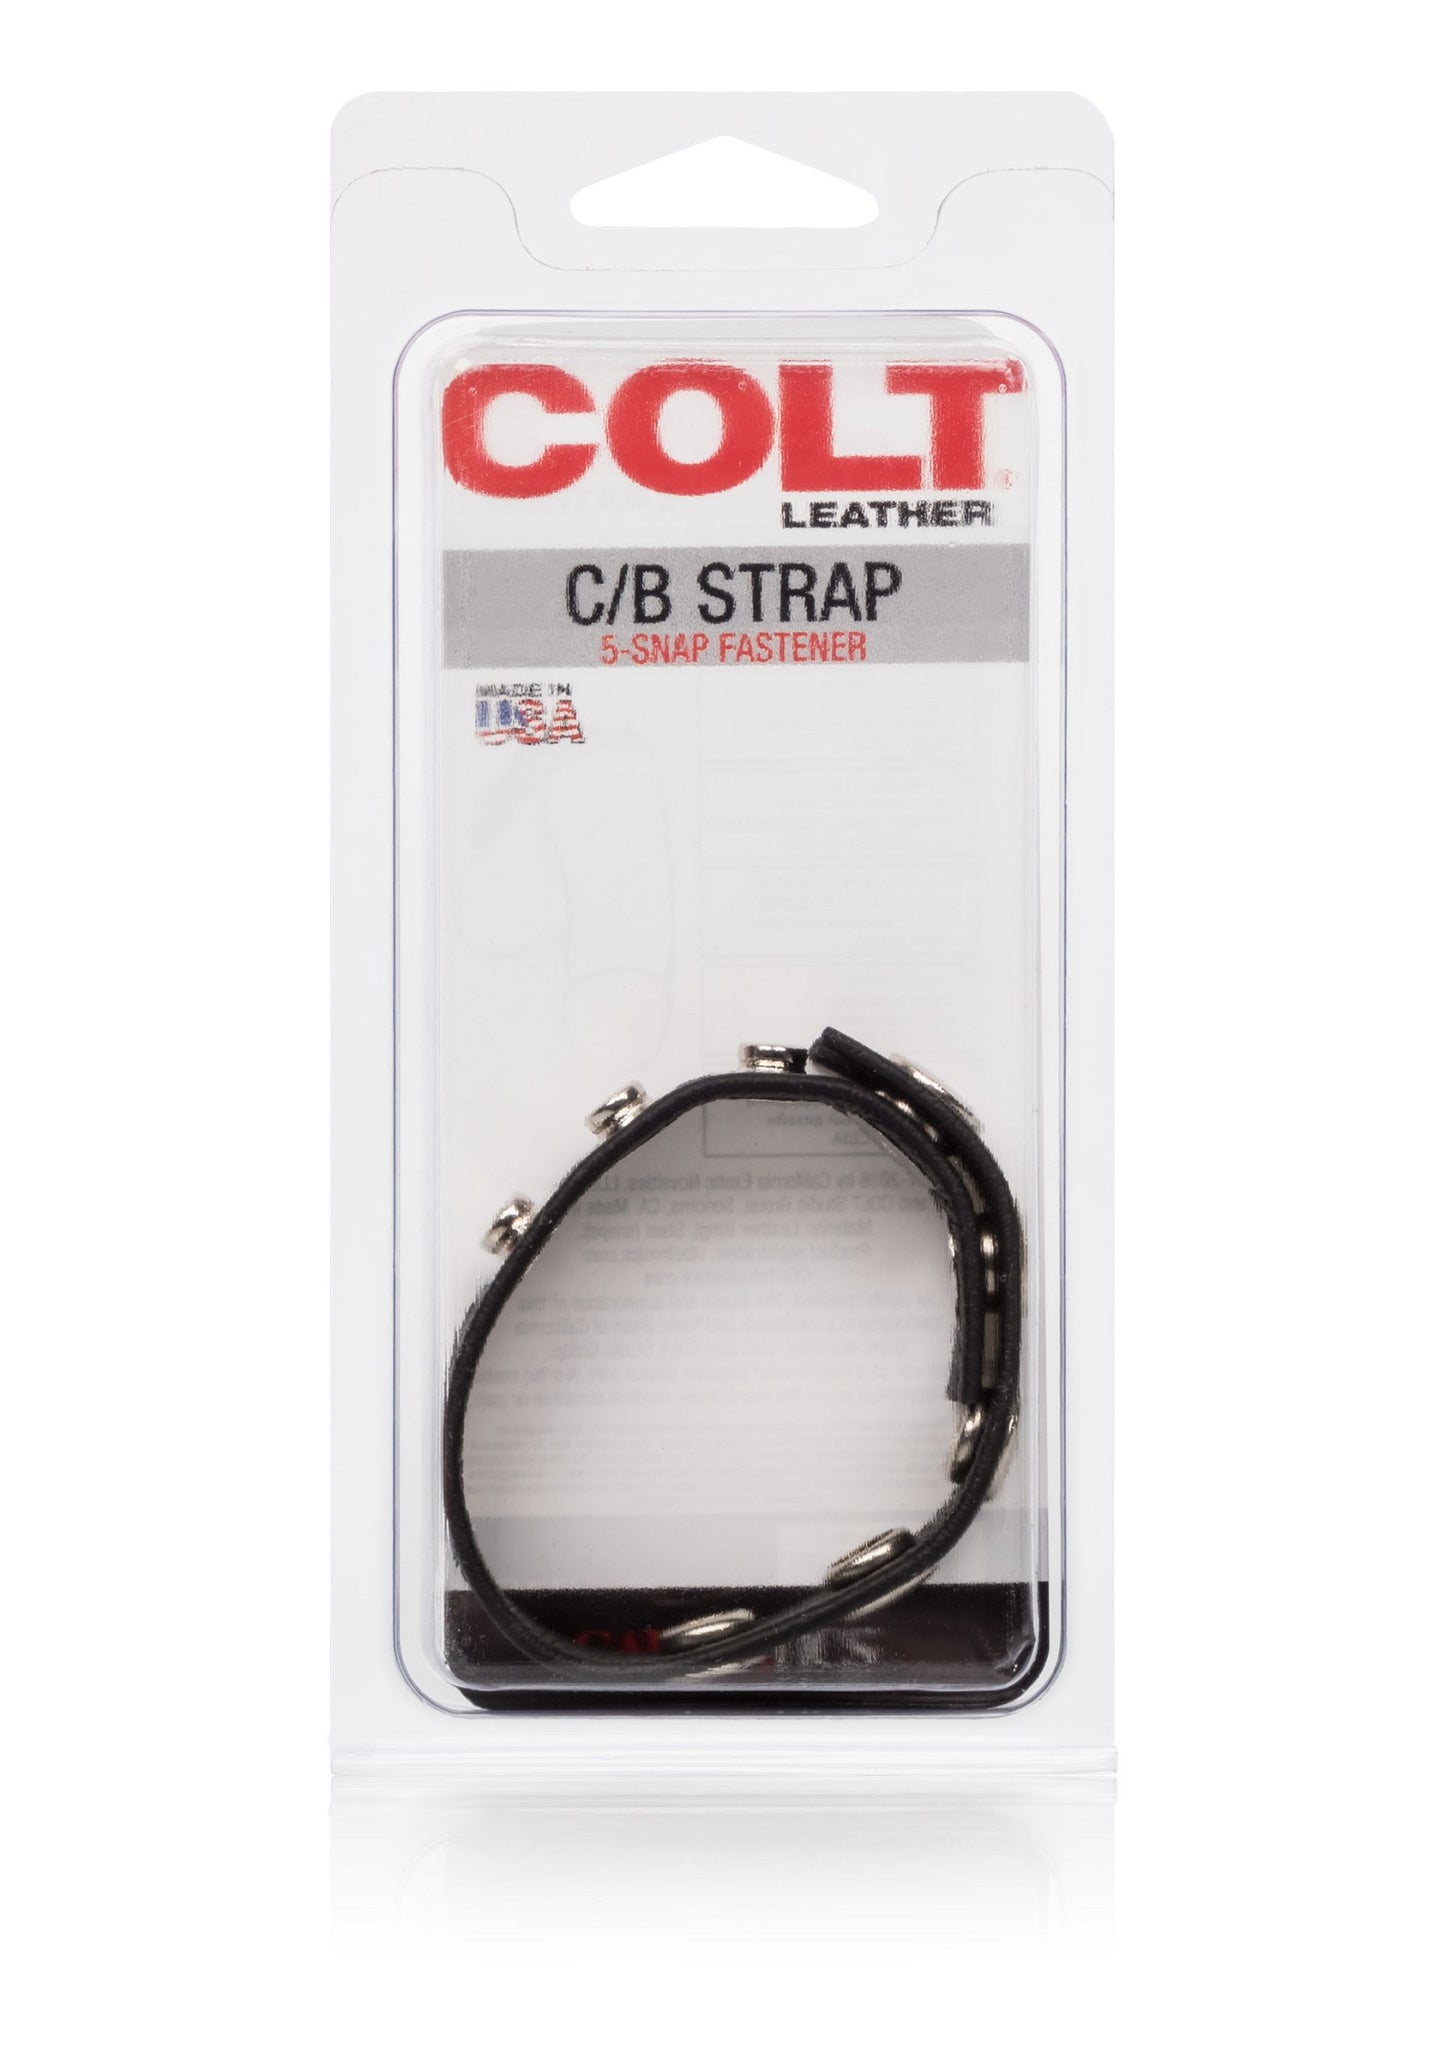 CalExotics COLT Leather C/B Strap 5-Snap Fastener BLACK - 1